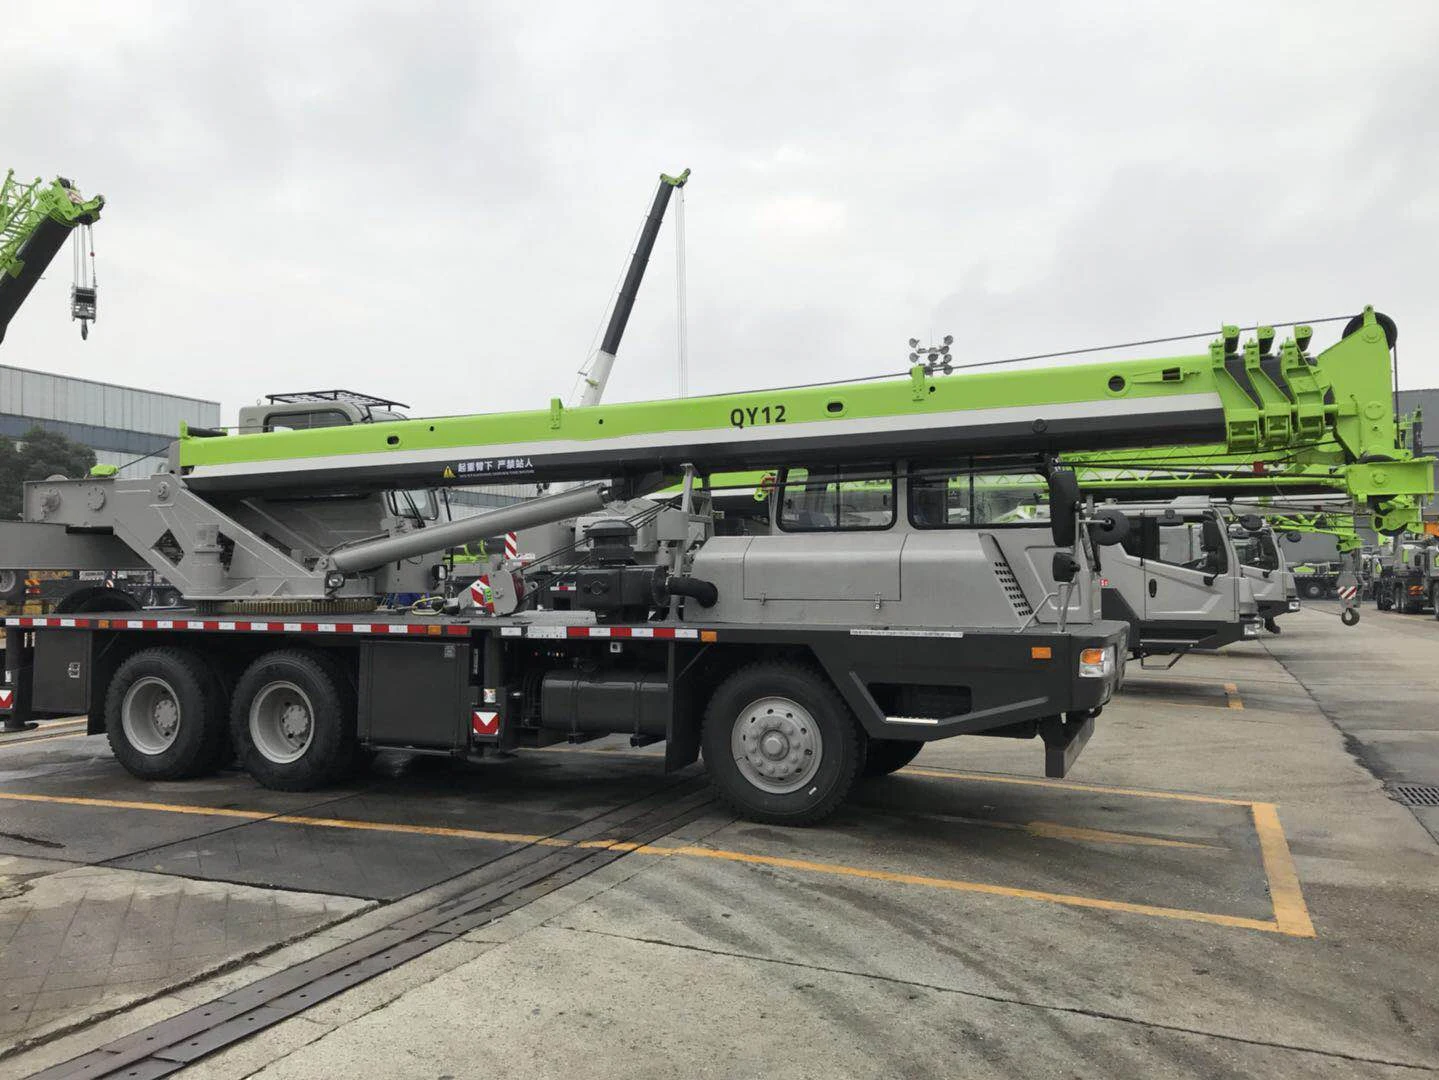 New 70 ton ZOOMLION mobile crane ZTC700V552 stock for sale